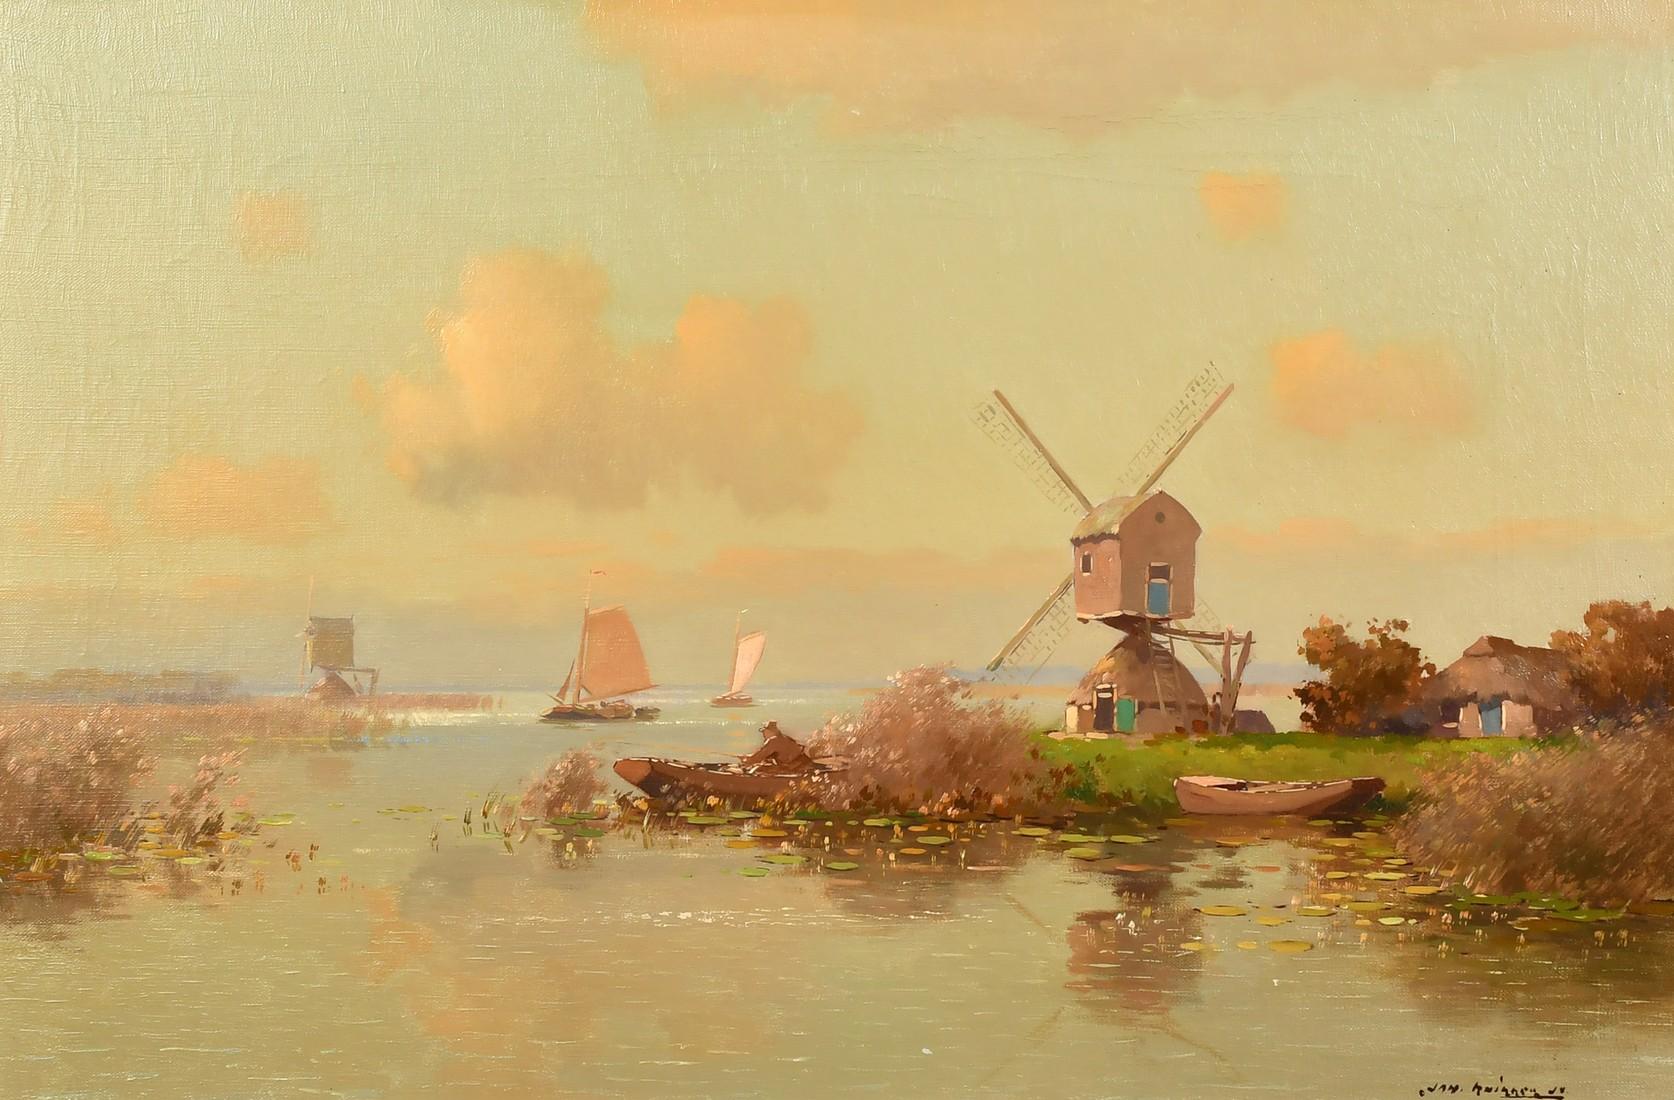 River Landscape with Windmill - Dutch Oil on Canvas Painting by Jan Knikker - Beige Landscape Painting by Jan Knikker Jr.